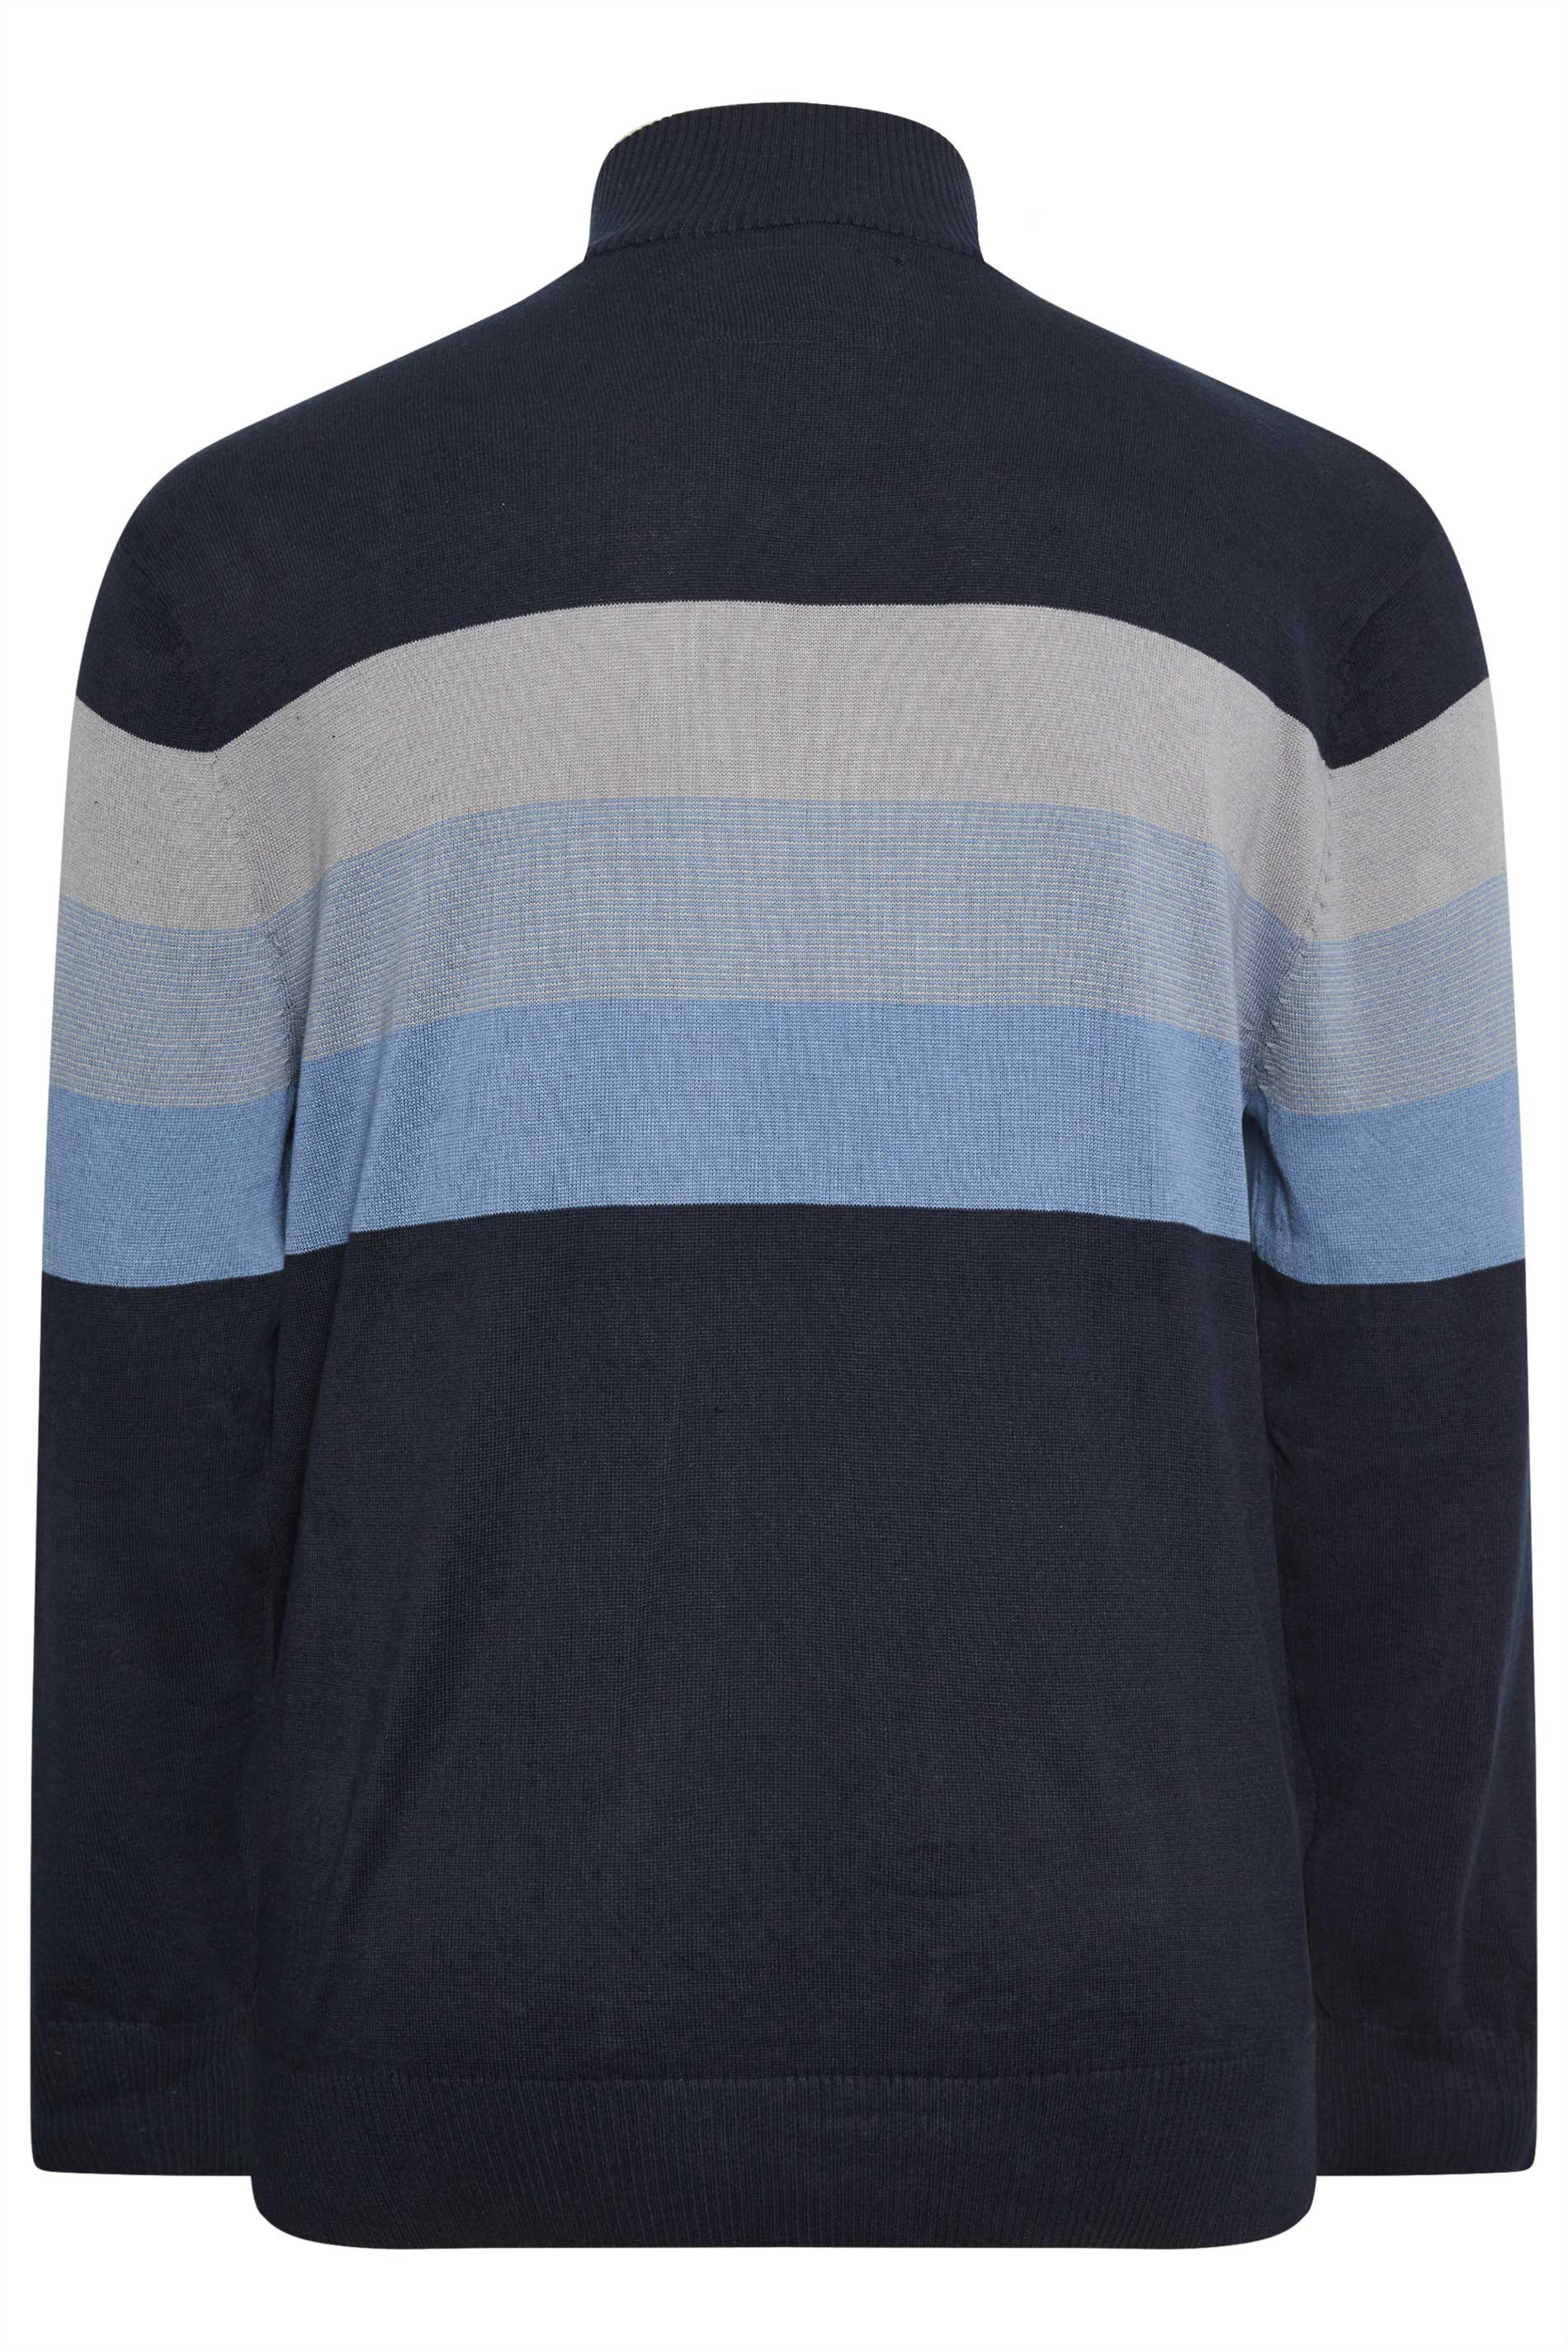 KAM Big & Tall Navy Blue Half Zip Stripe Knitted Jumper | BadRhino 3